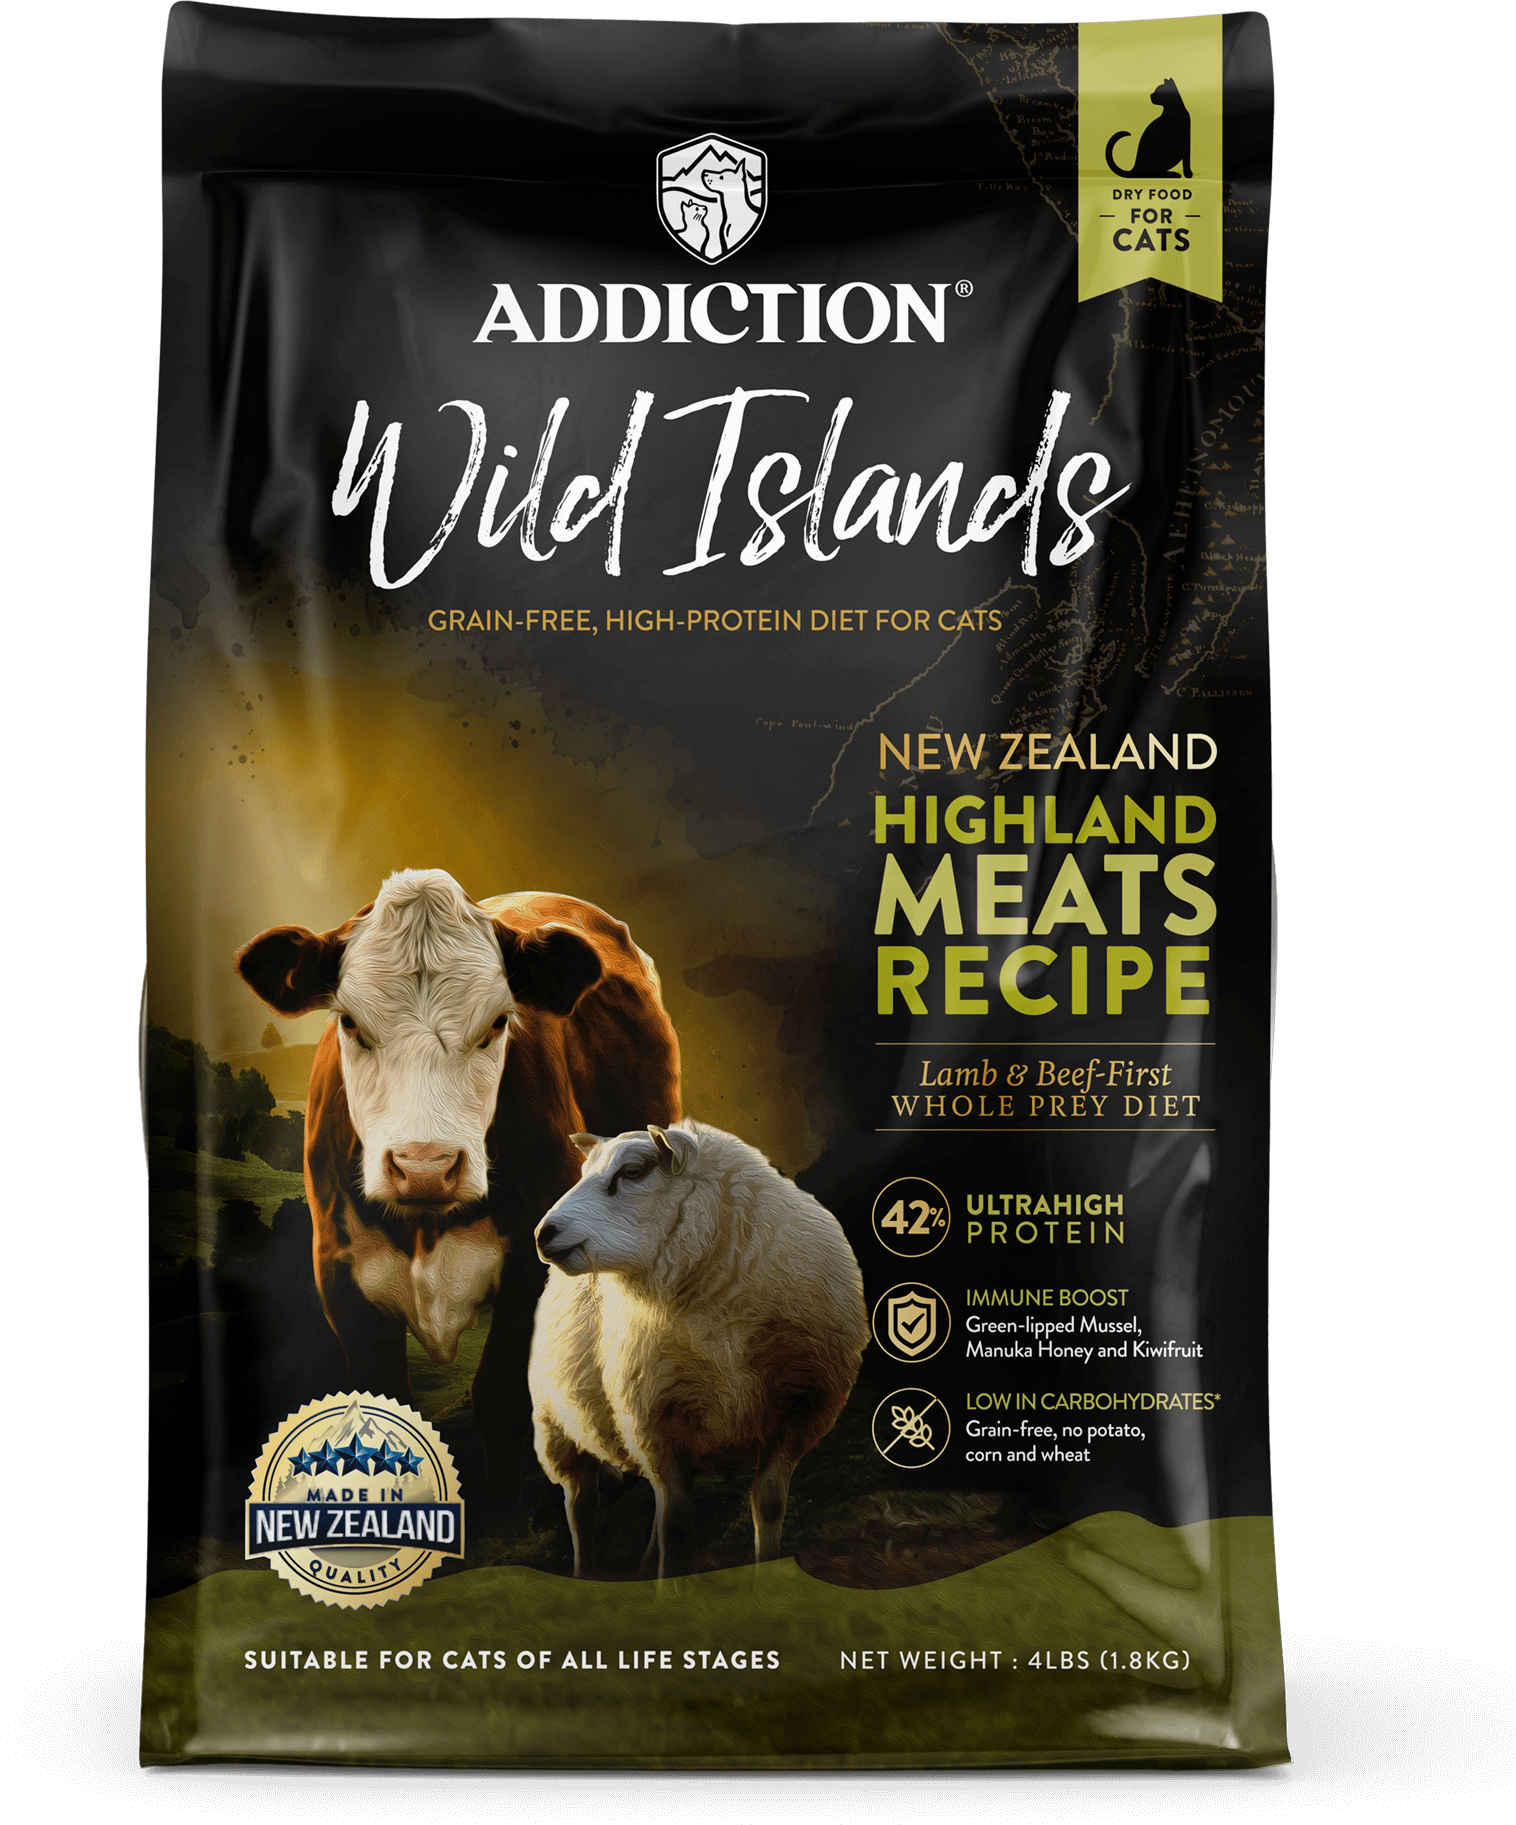 Addiction Wild Islands Highland Meats Recipe